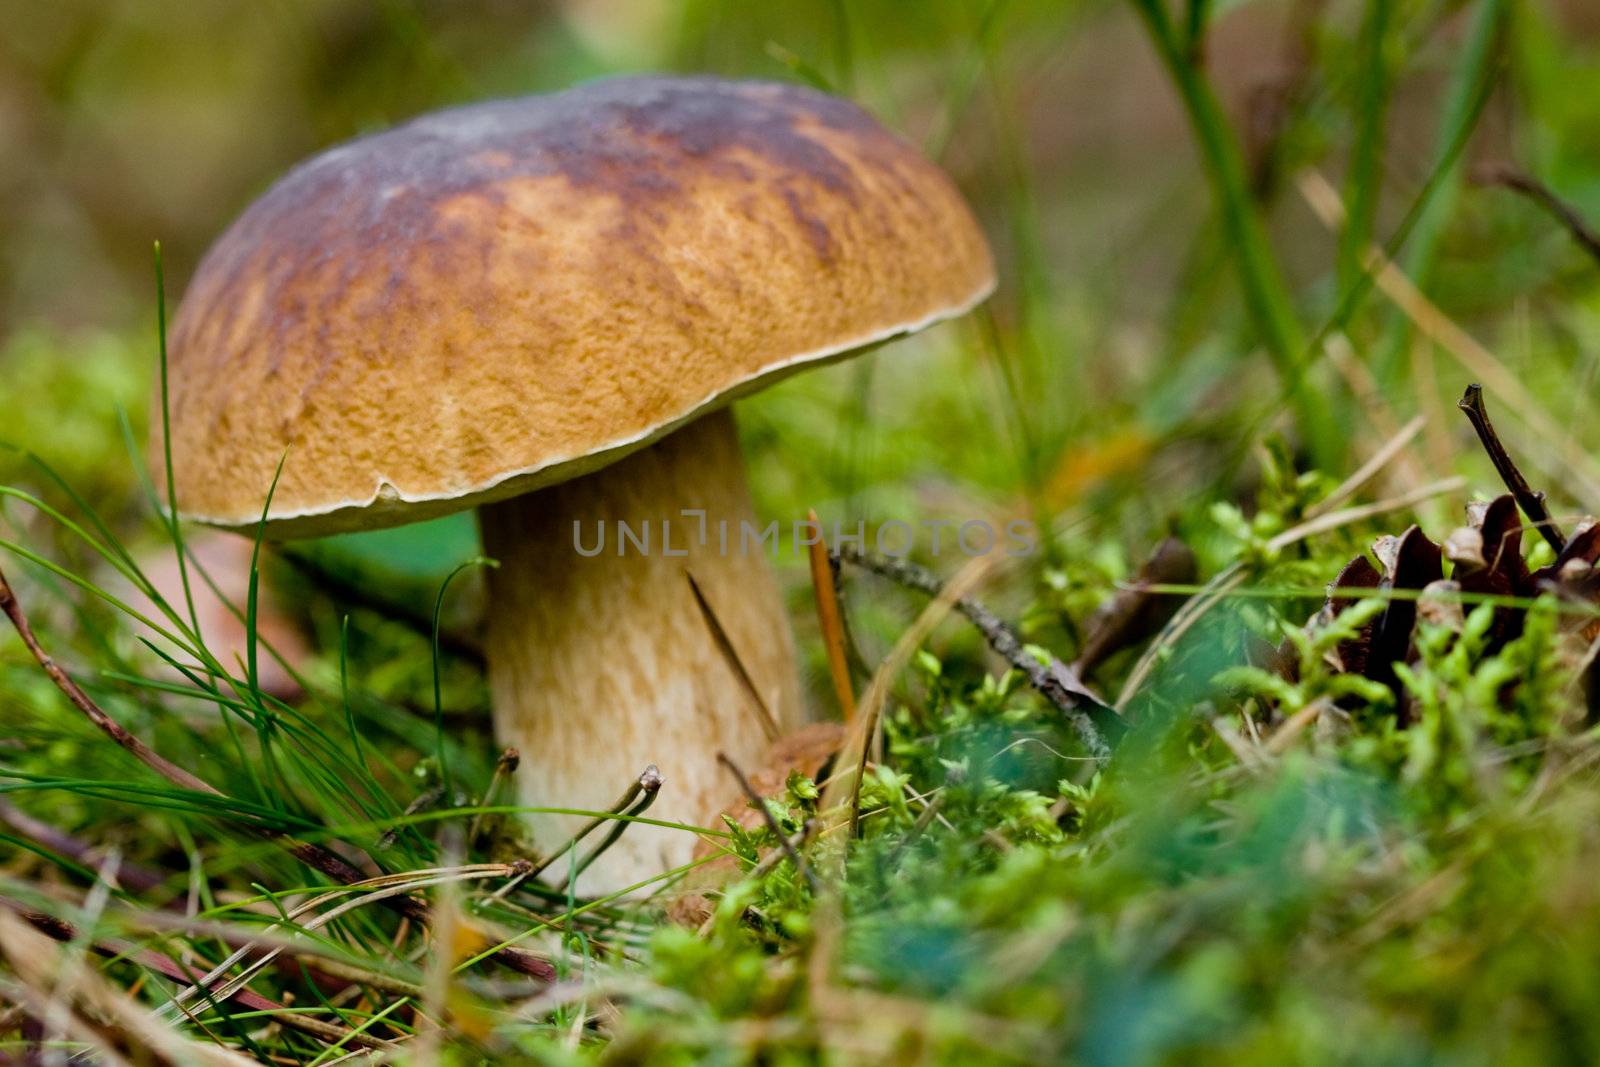 Mushroom in the grass by Gbuglok